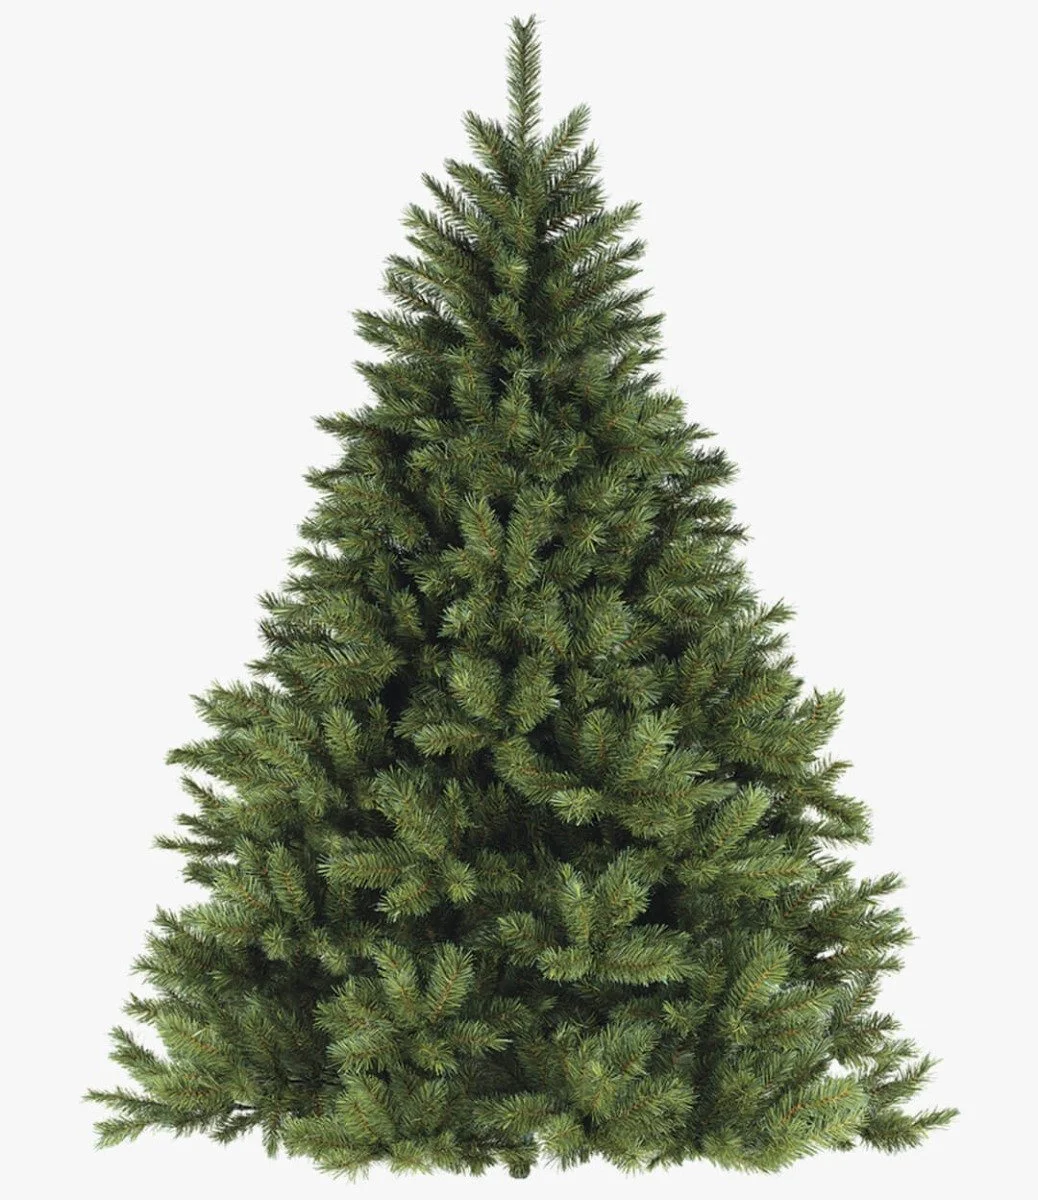 The Noble Fir Christmas Tree